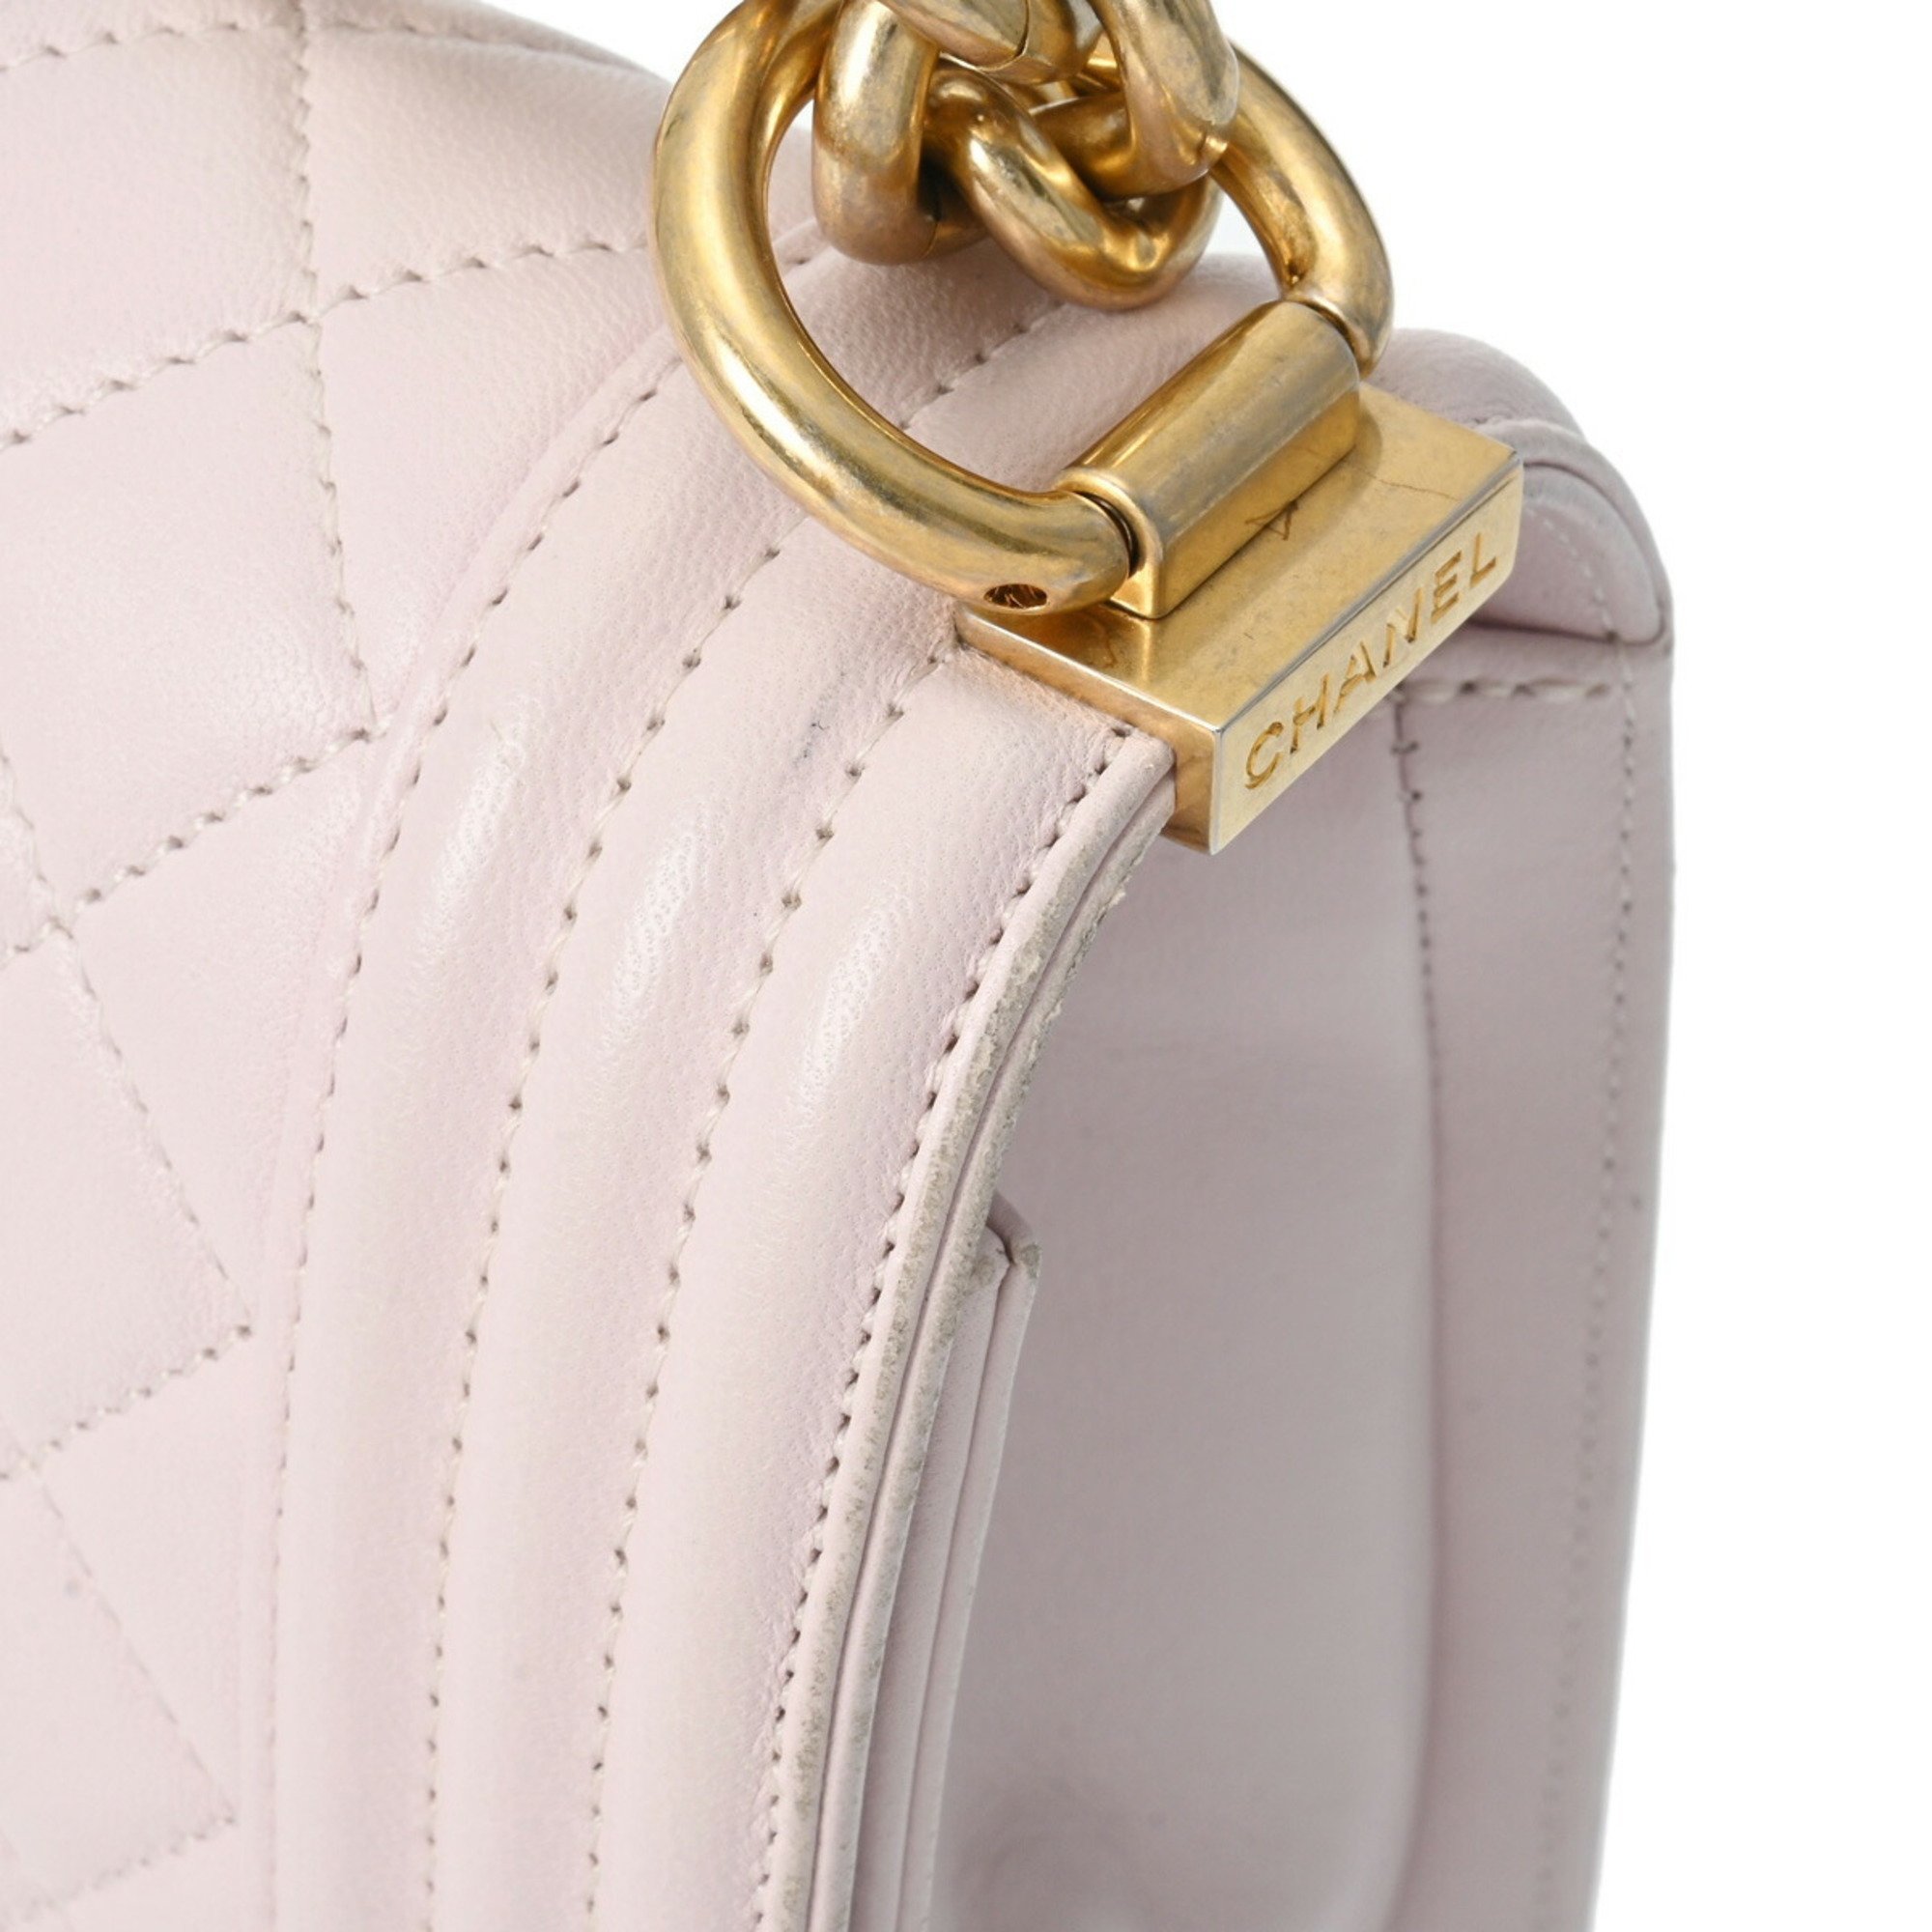 CHANEL Boy Chanel Chain Shoulder Bag 25cm Light Pink A67086 Women's Lambskin